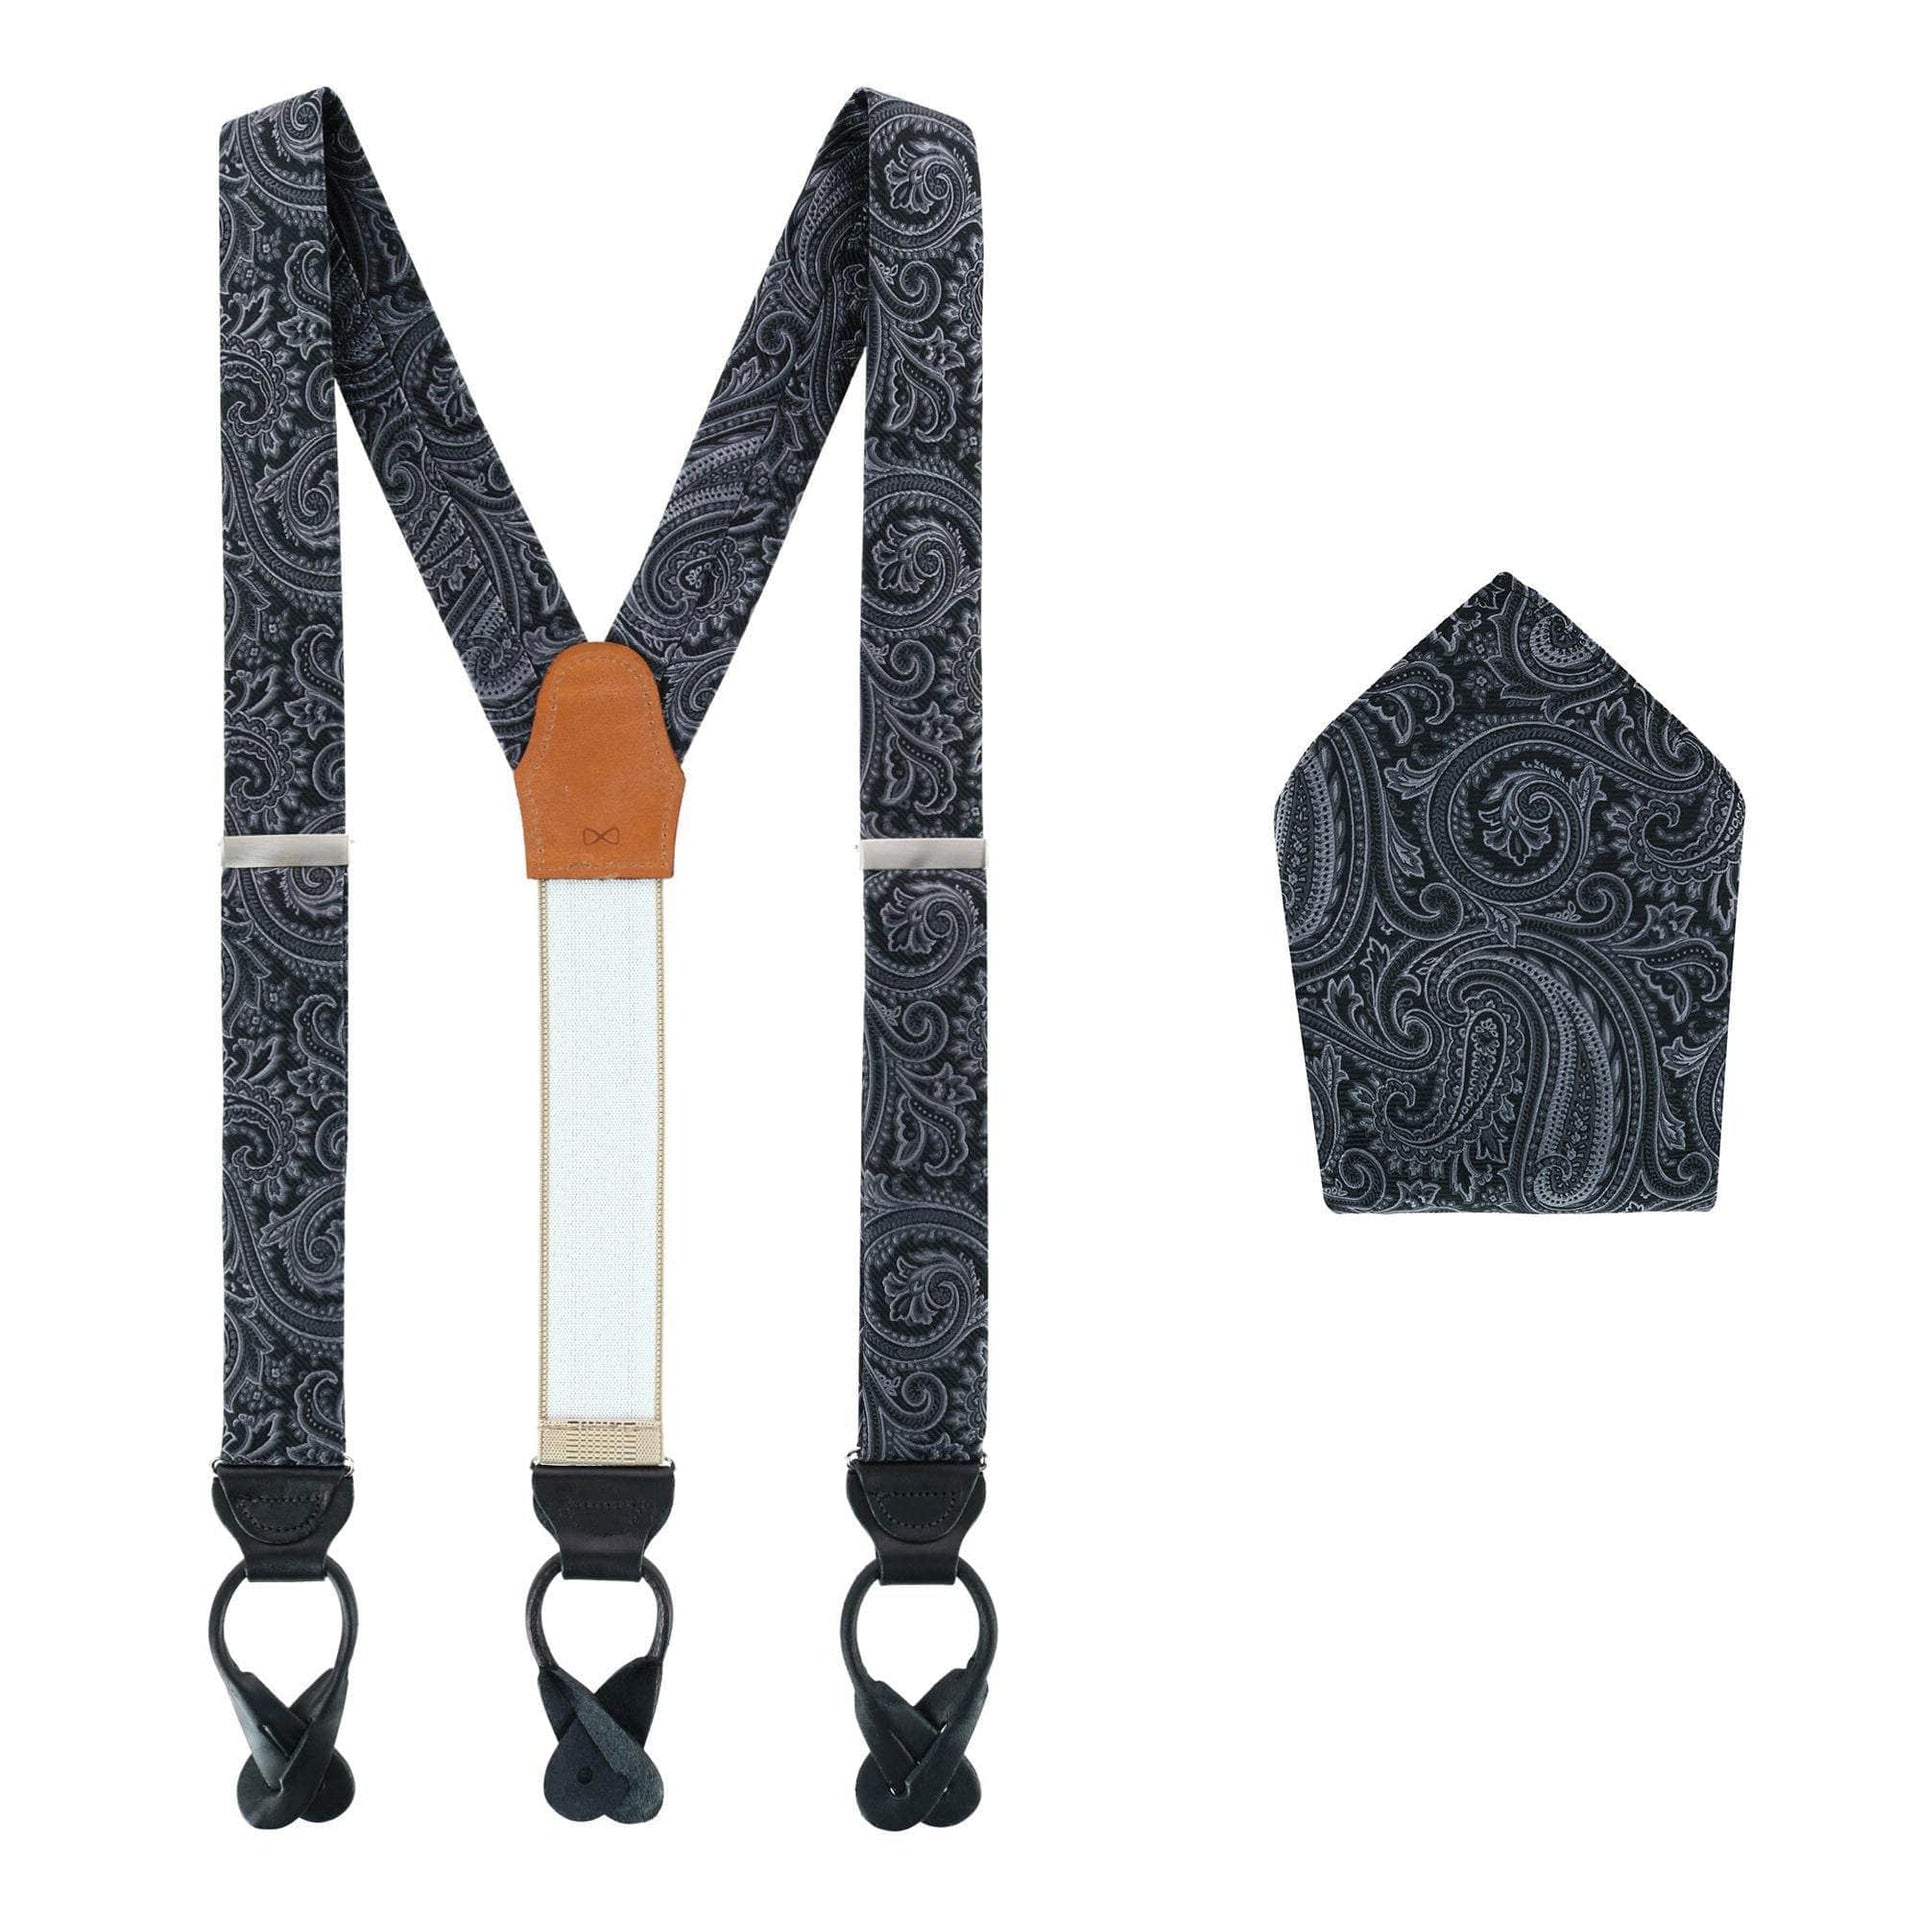 Sobee Paisley Silk Brace & Pocket Square Set by Trafalgar Men's Accessories